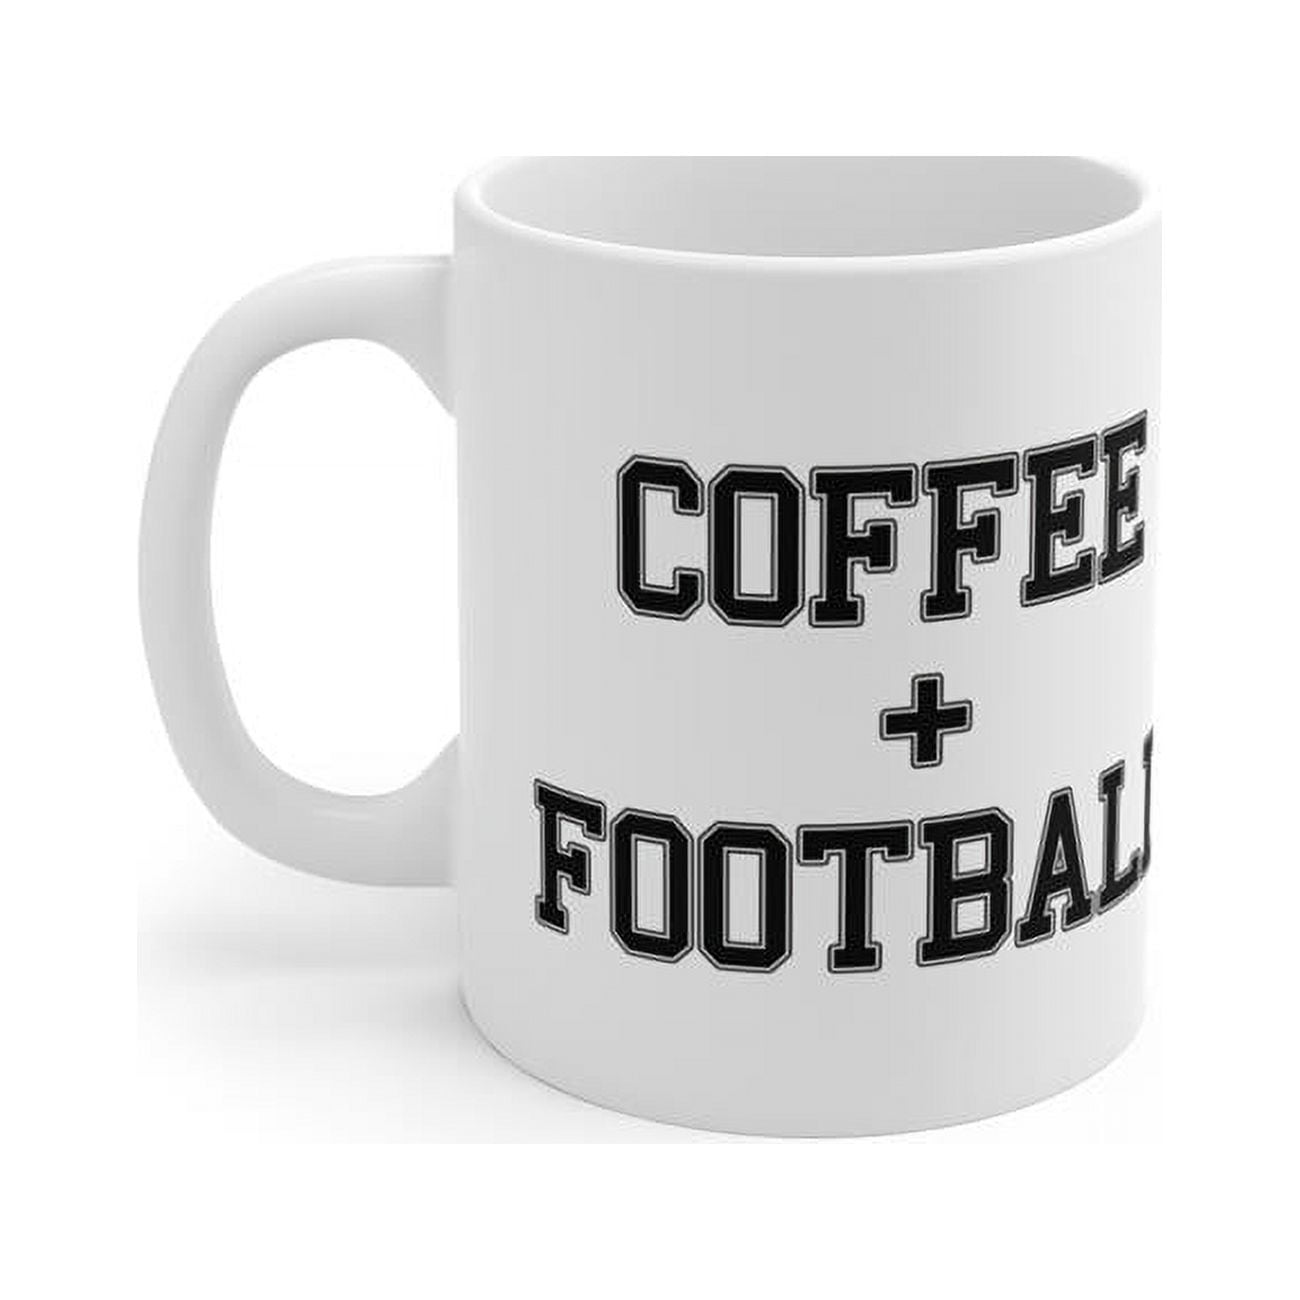 Cmc-w10103 Coffee And Football, White Sports Coffee Mug, 11 Oz - Ceramic